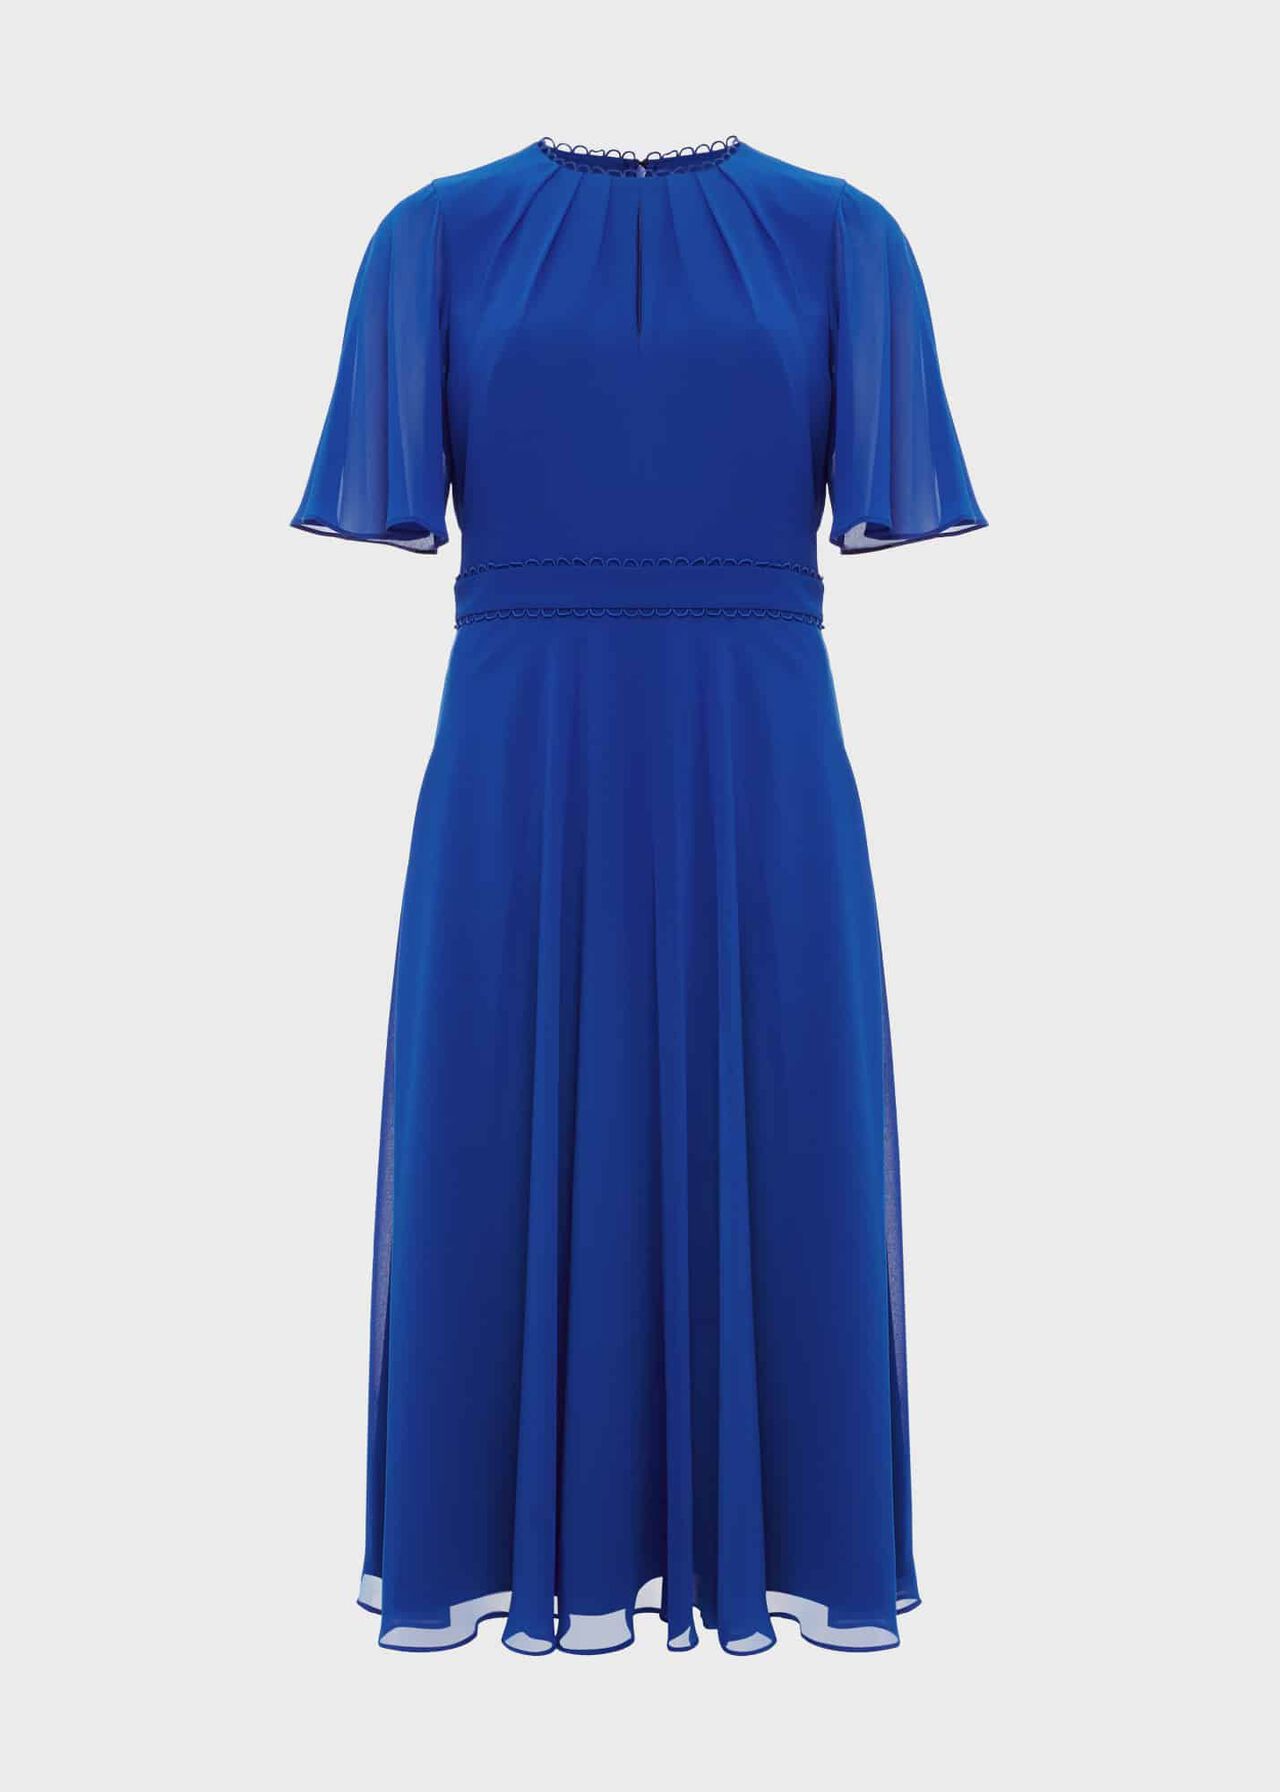 Petite Samara Fit And Flare Dress, Lapis Blue, hi-res